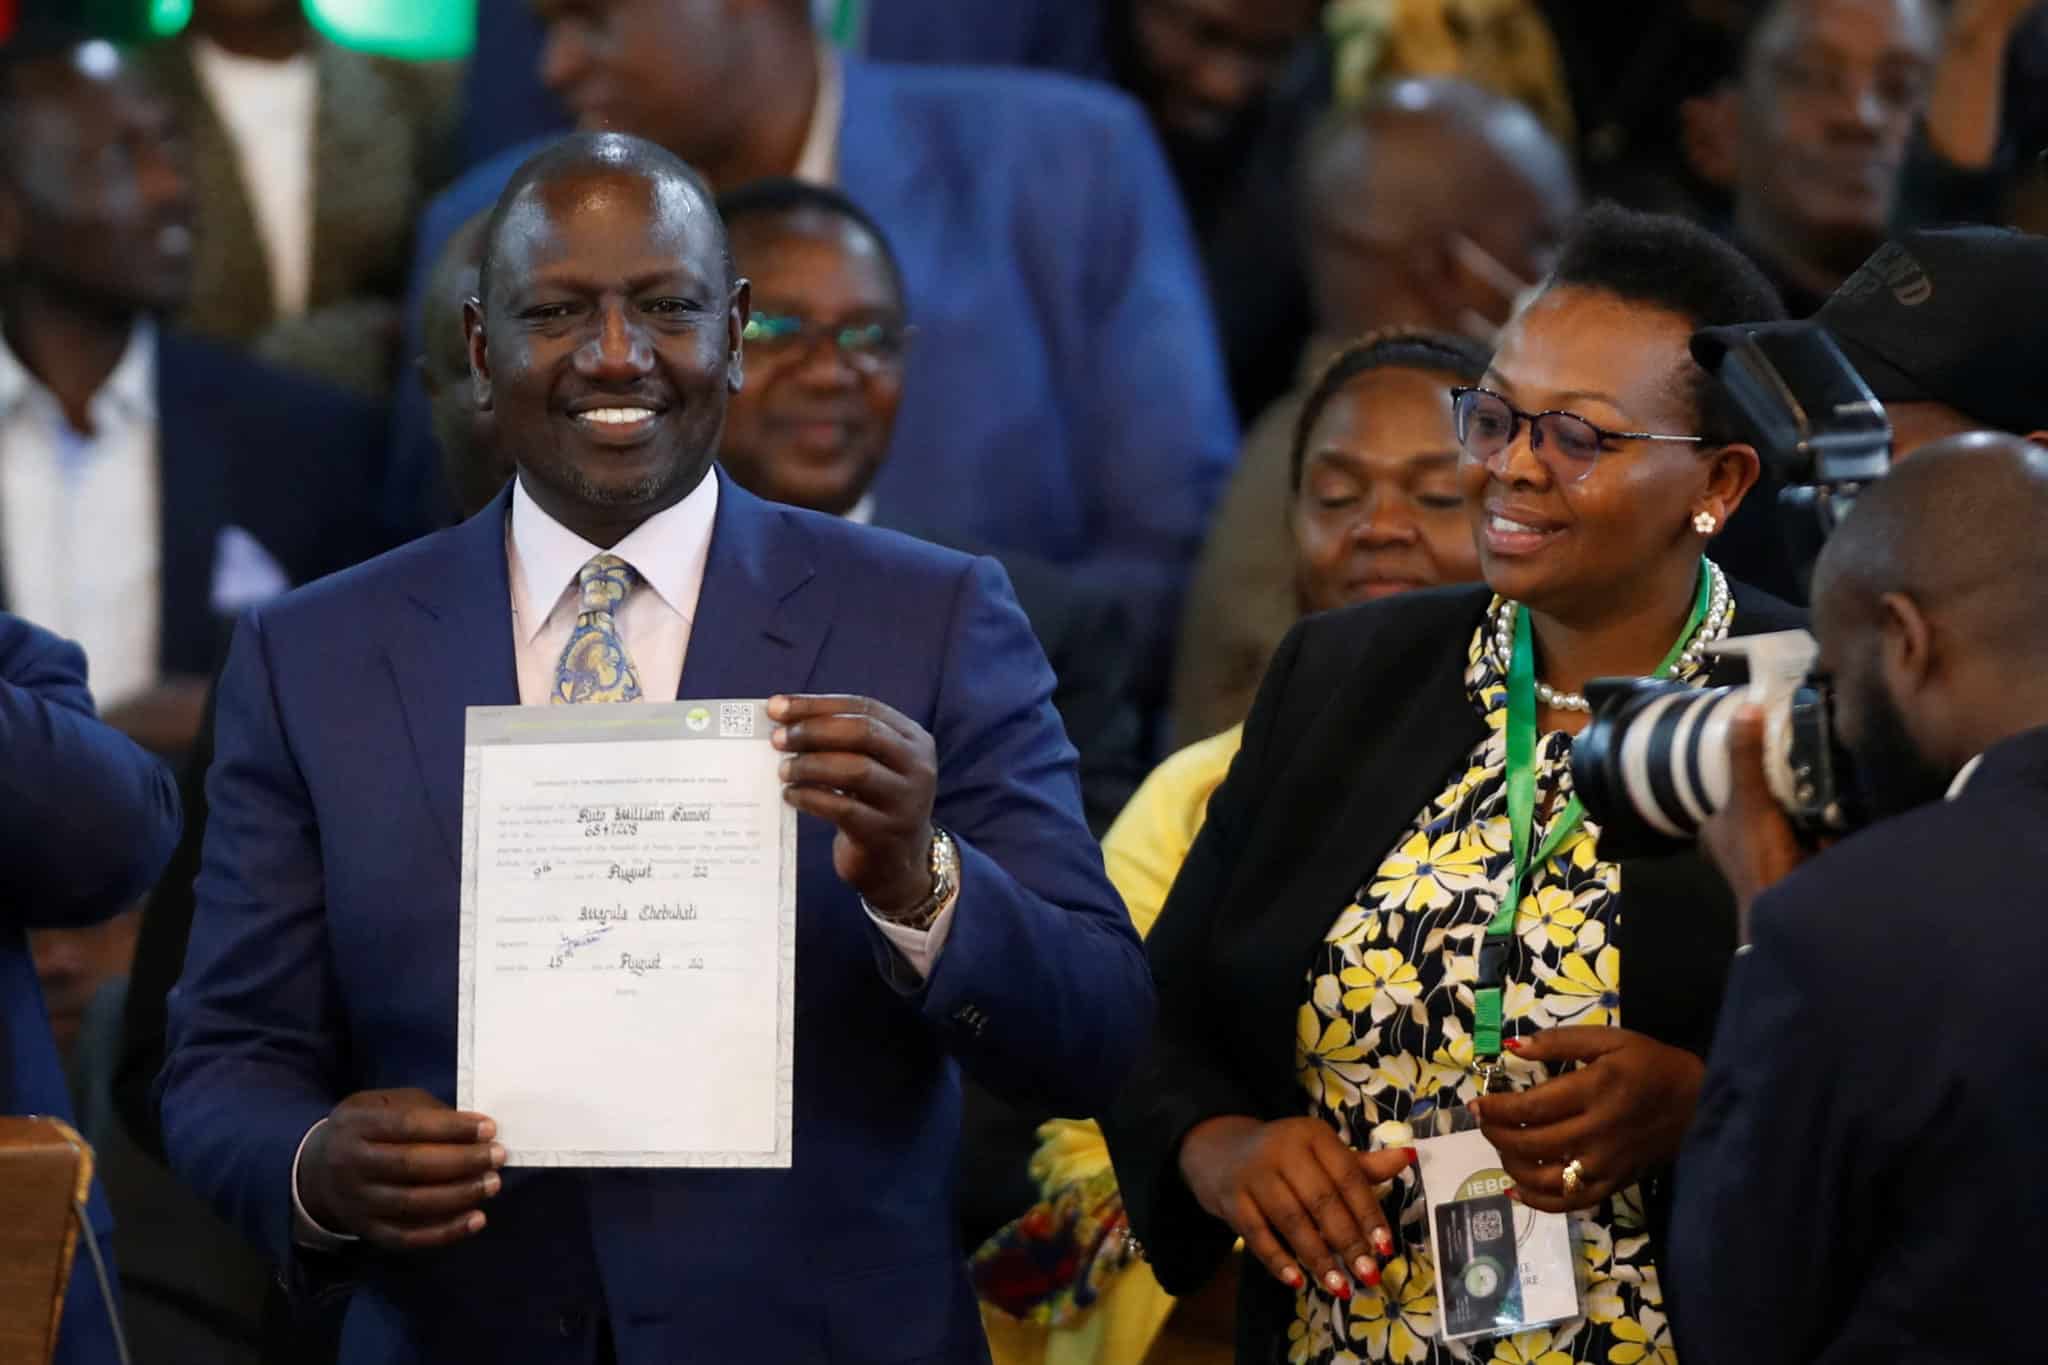 Kenya’s Ruto declared president-elect in chaotic scenes